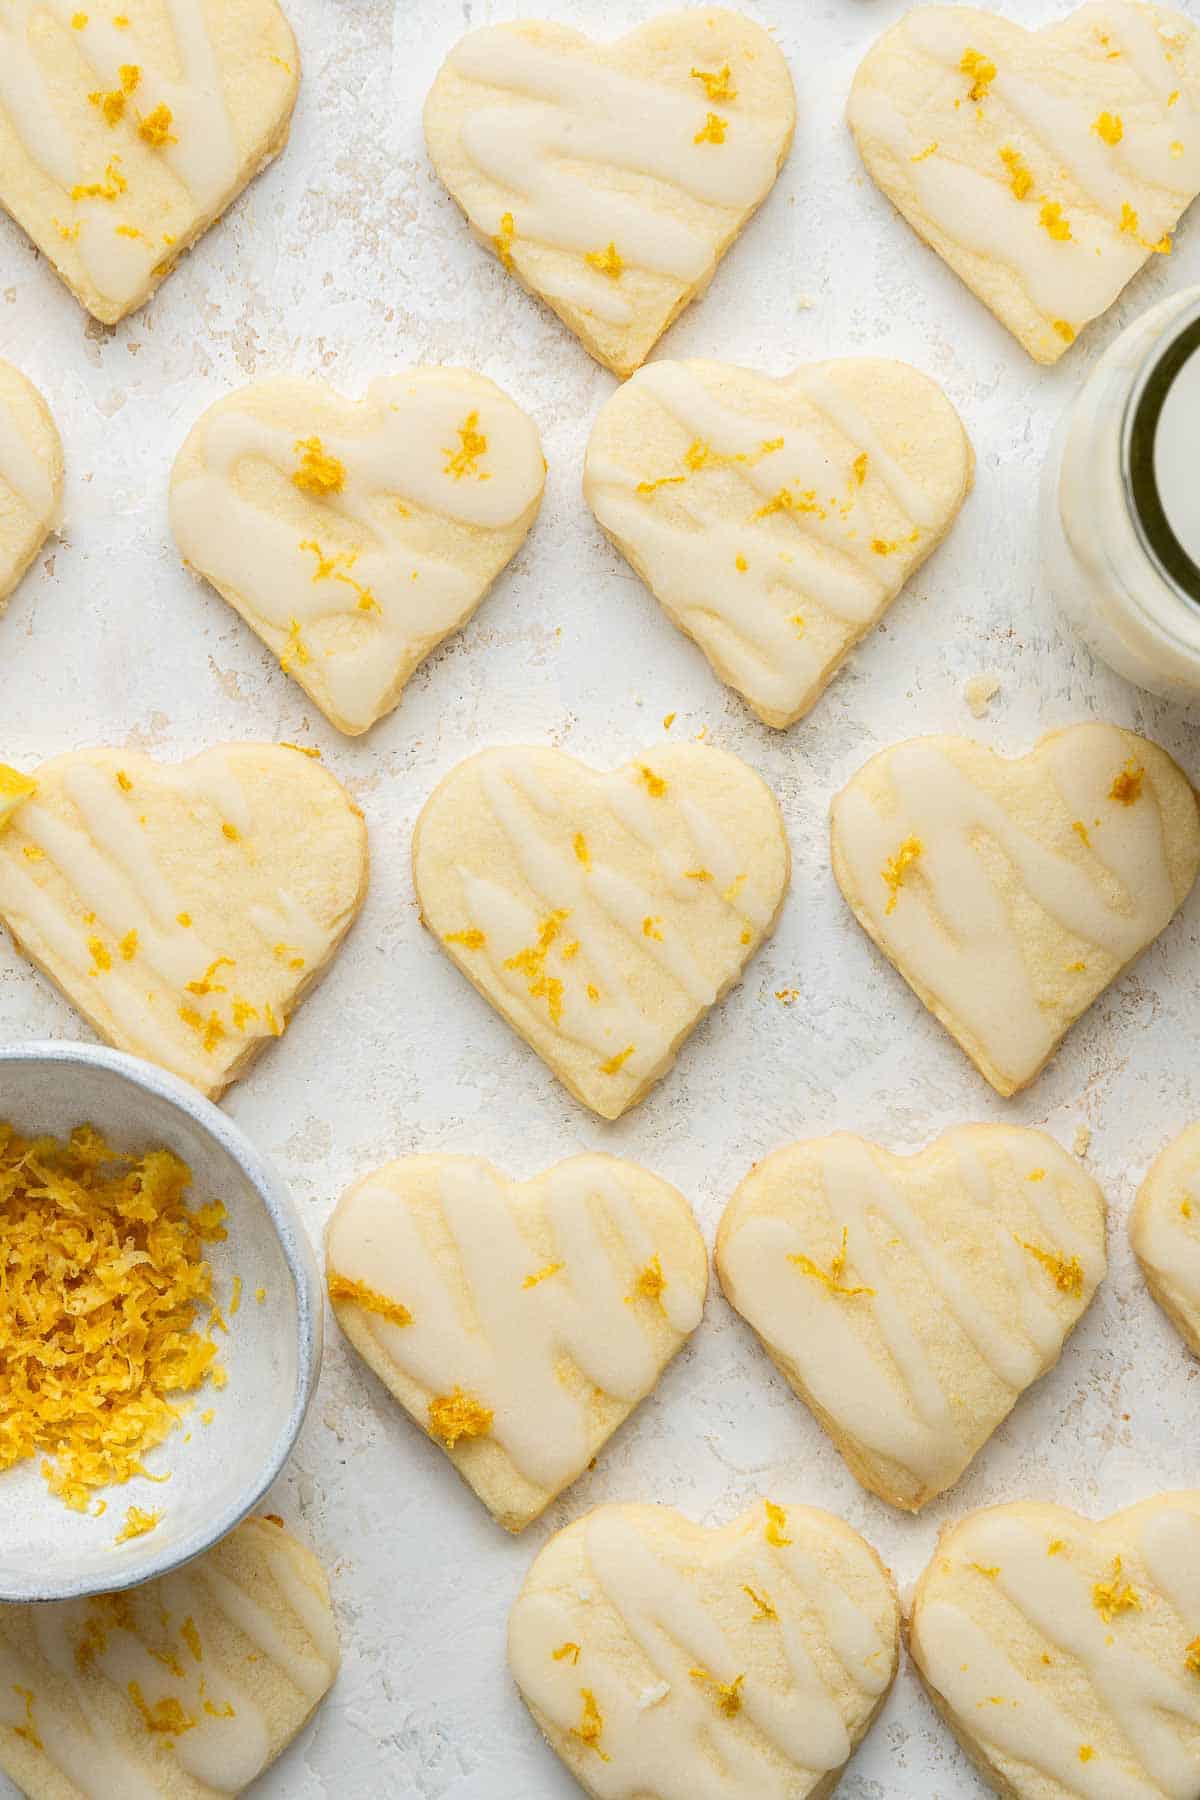 Neatly arranged heart cookies with lemon zest and glaze.